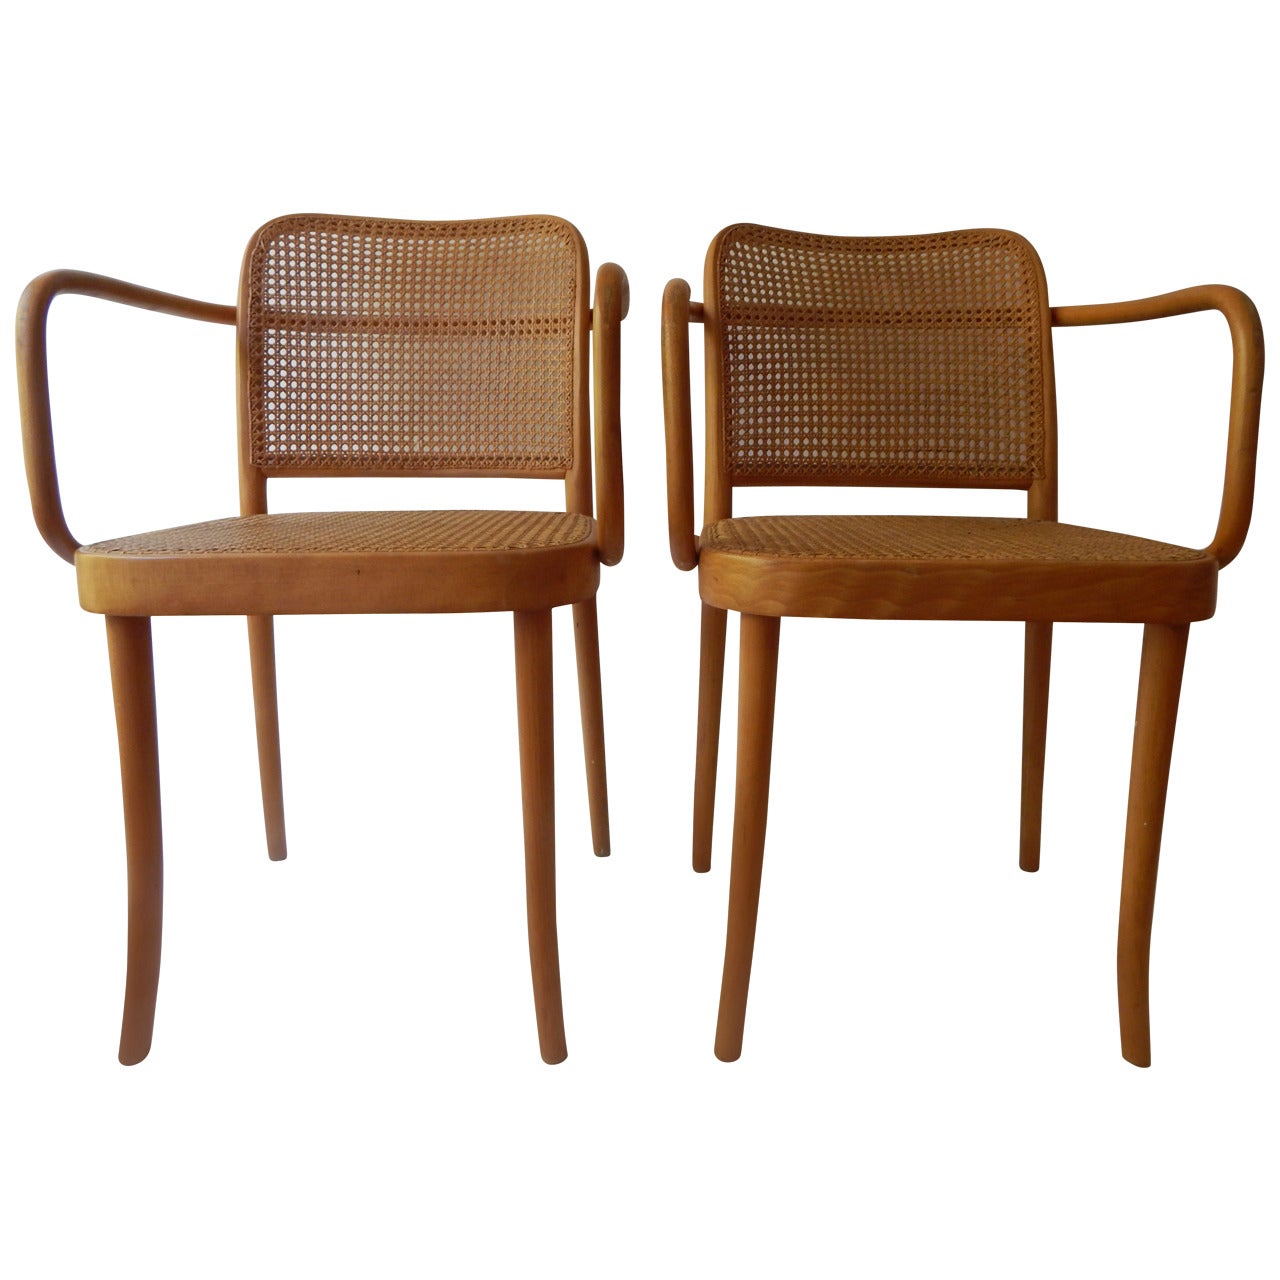 Pair of Josef Hoffmann Cane Bentwood Chairs